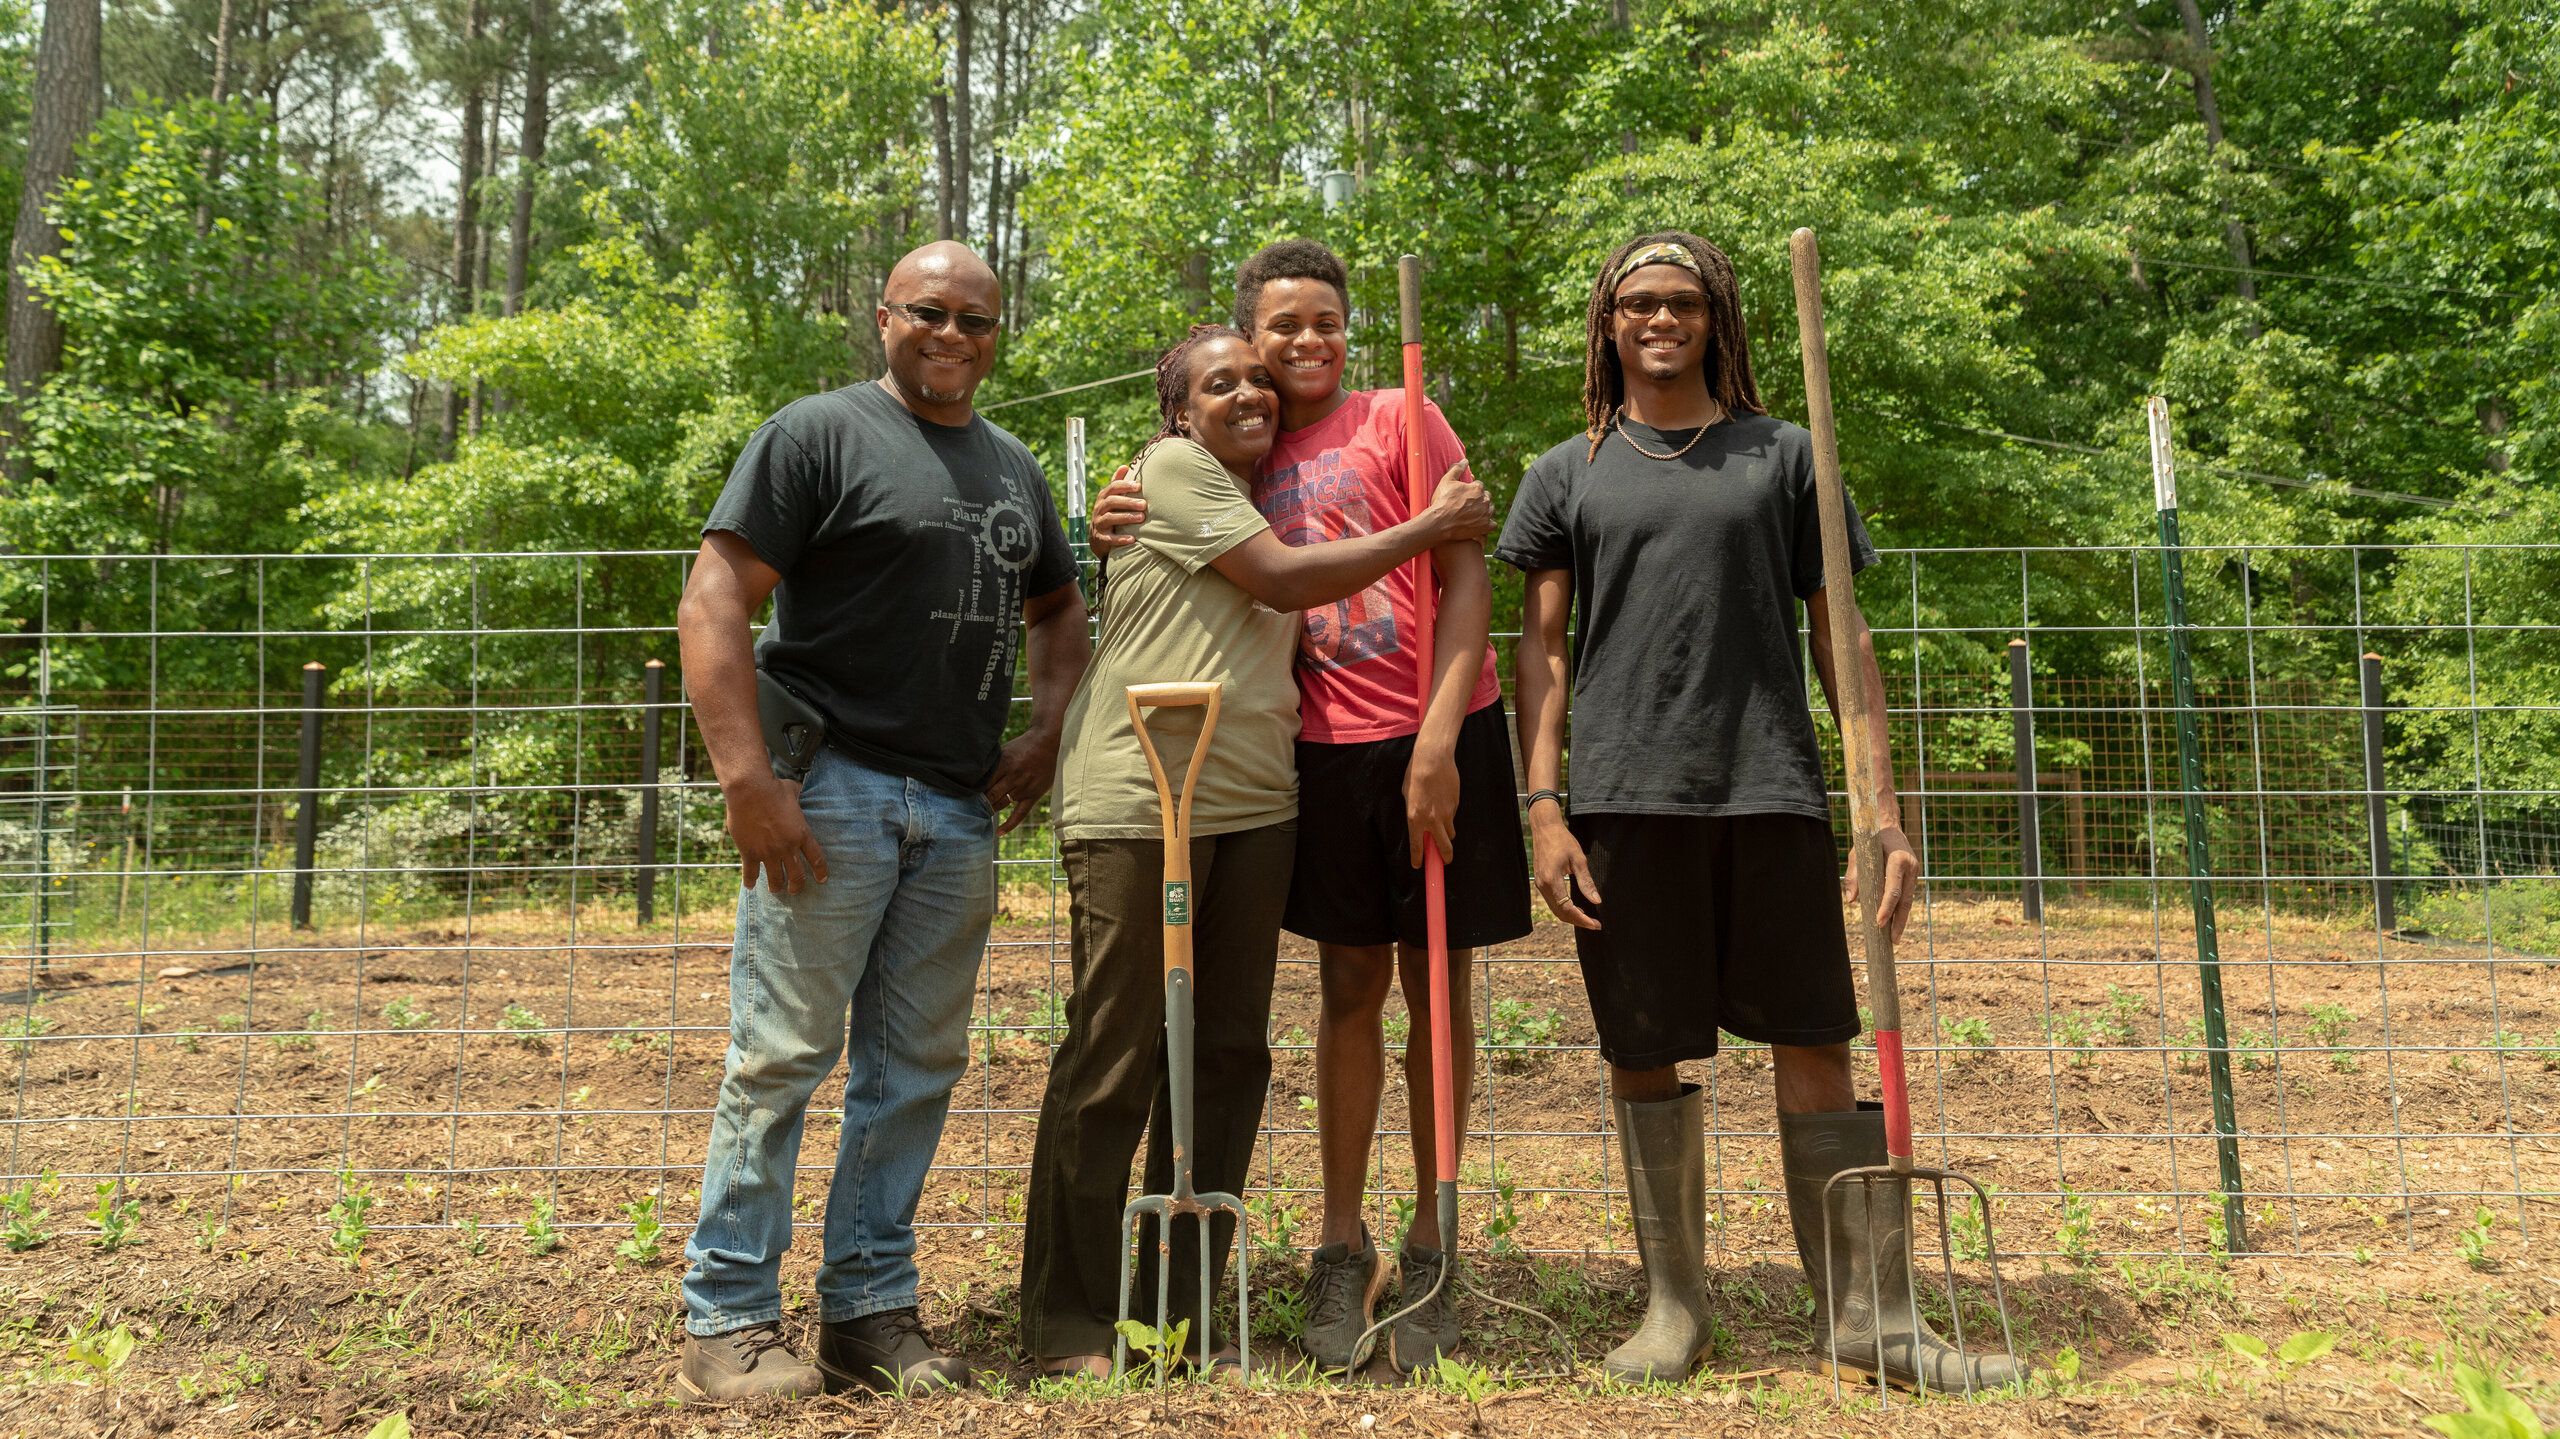 (L-R) Warren Cameron (husband), Keisha, and children Zachary and Abraham. The family owns High Hog Farm in Grayson, Georgia.